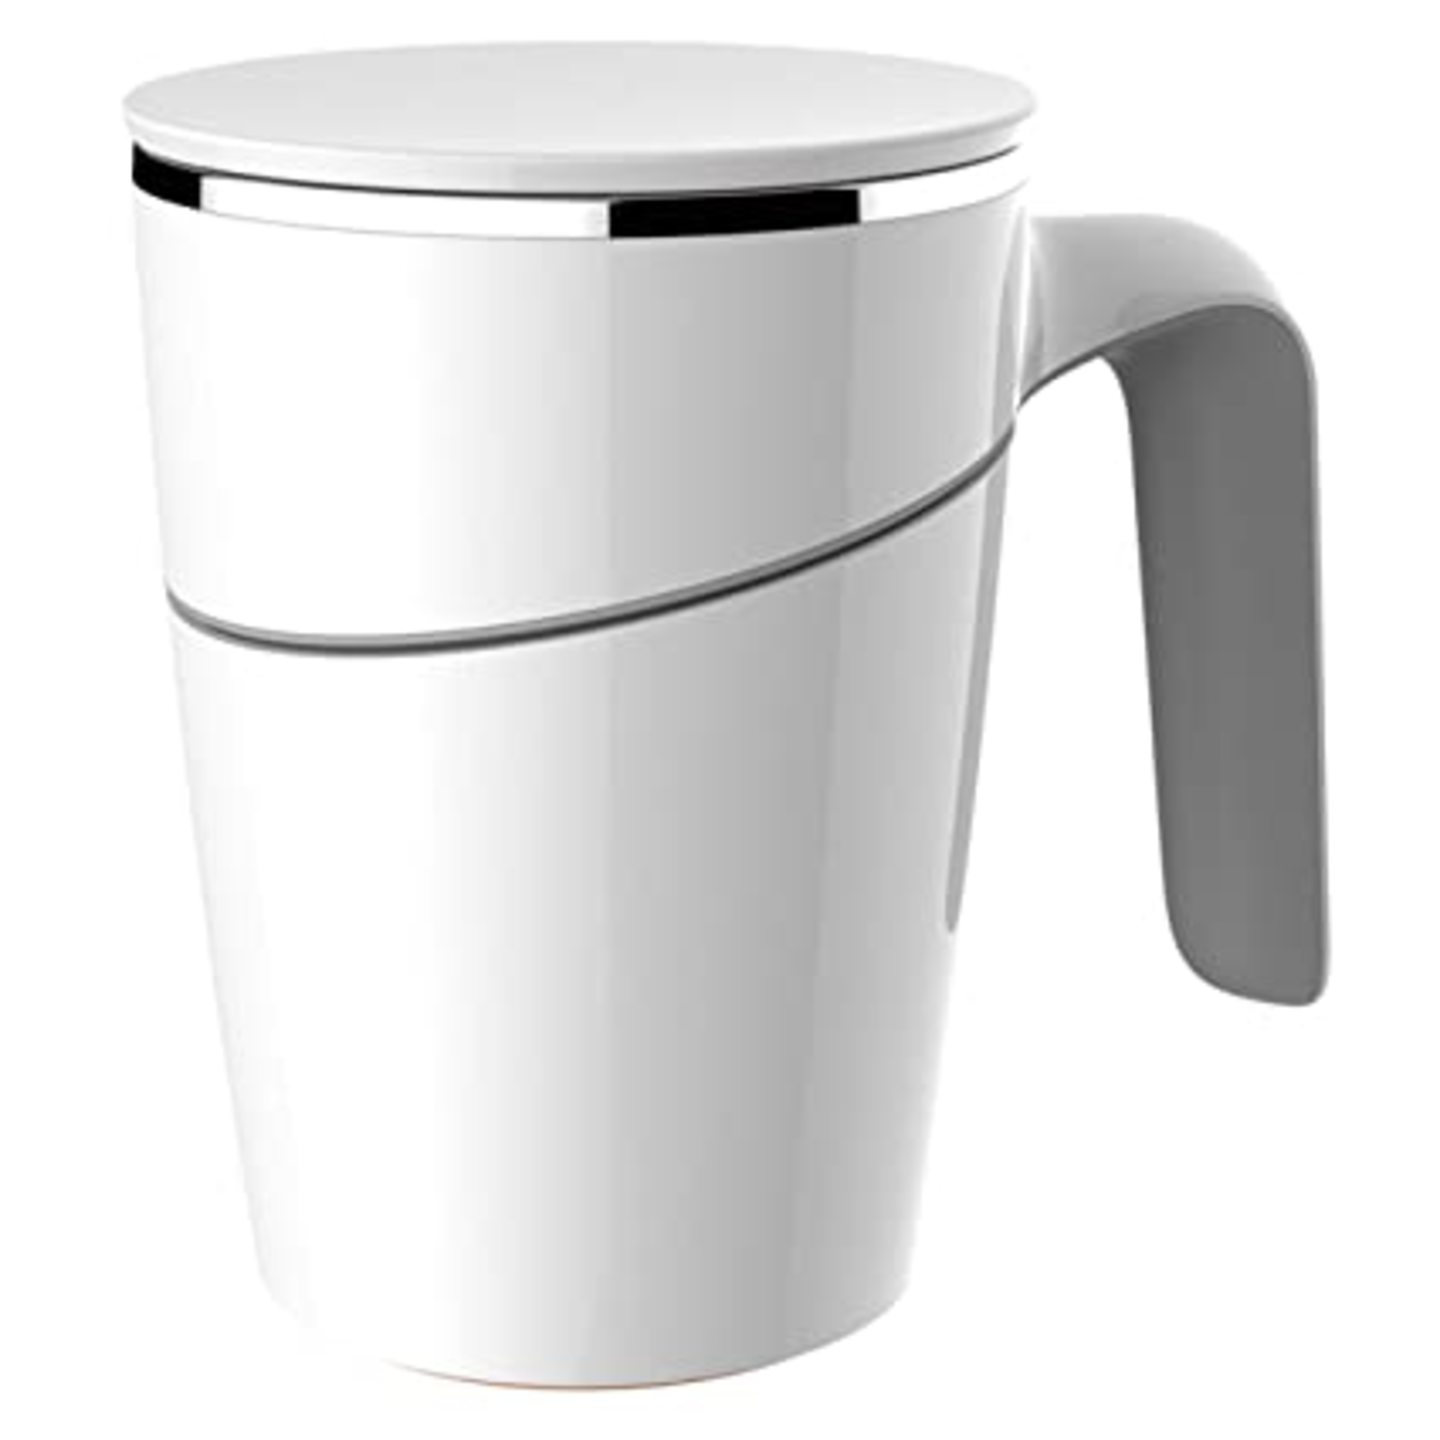 Stainless steel Mug